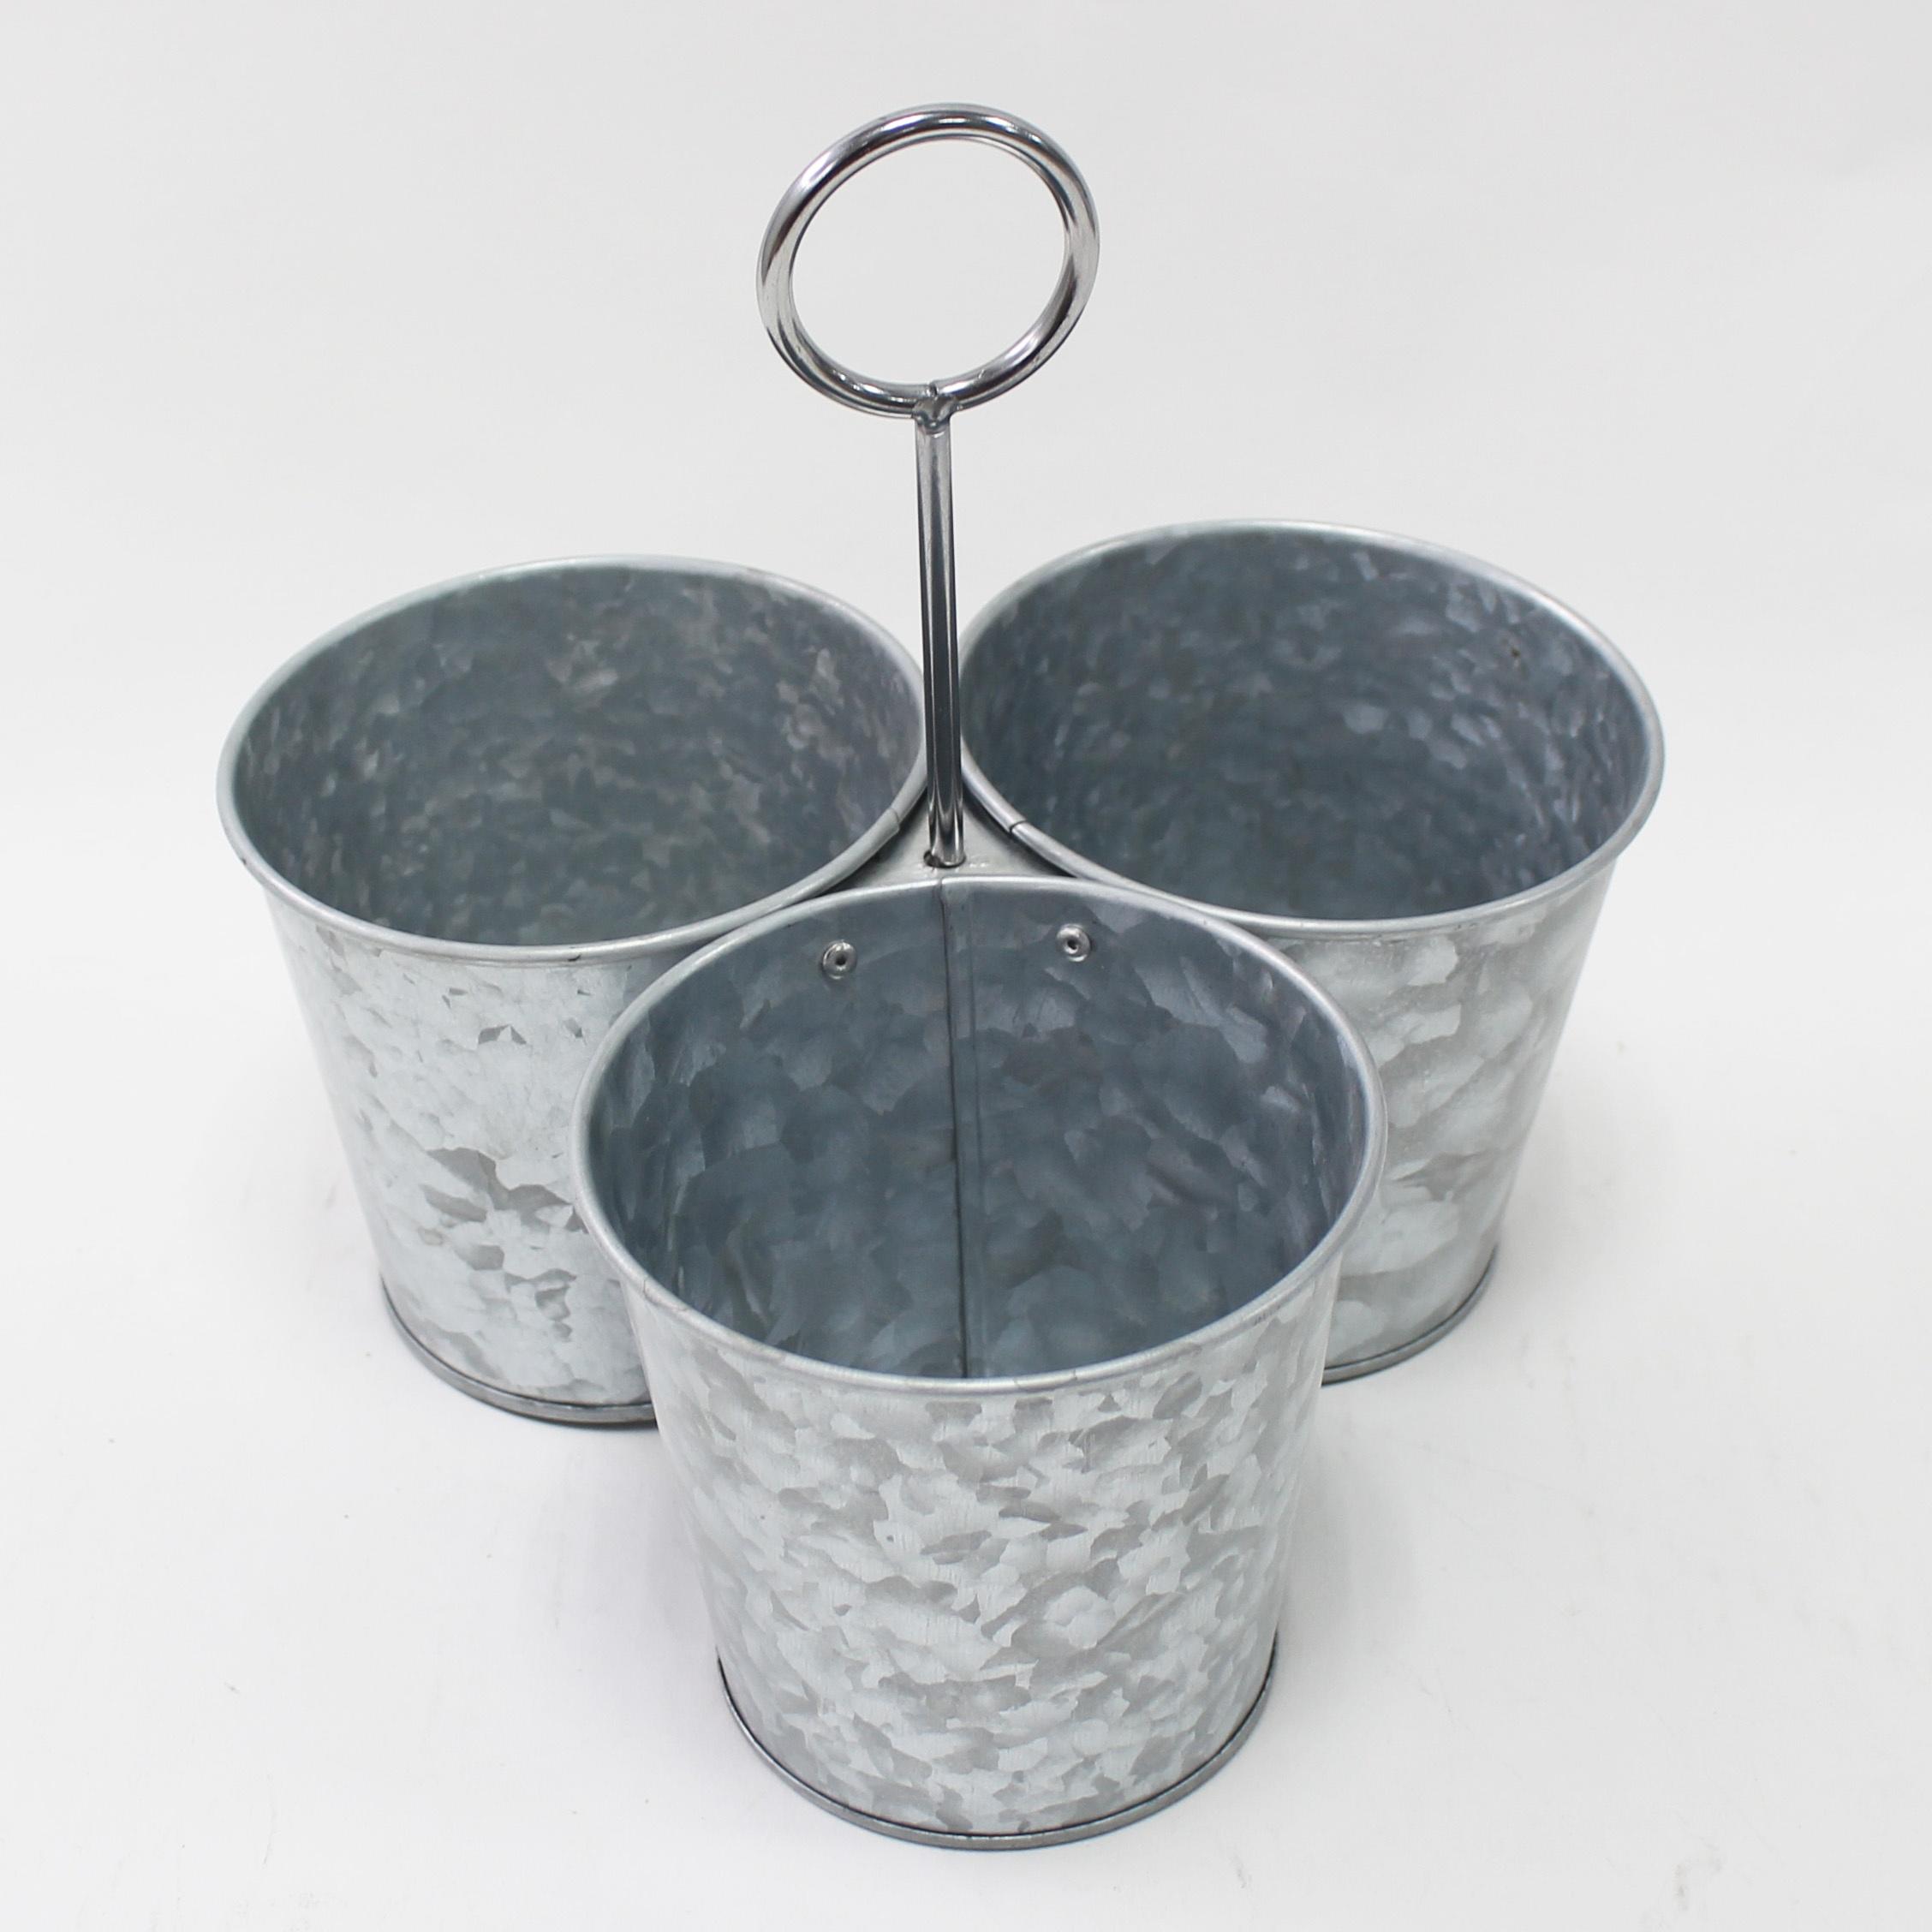 kitchen utensils Holders Candy Set Includes 3 Galvanised Iron buckets, garden hanging planter plant buckets